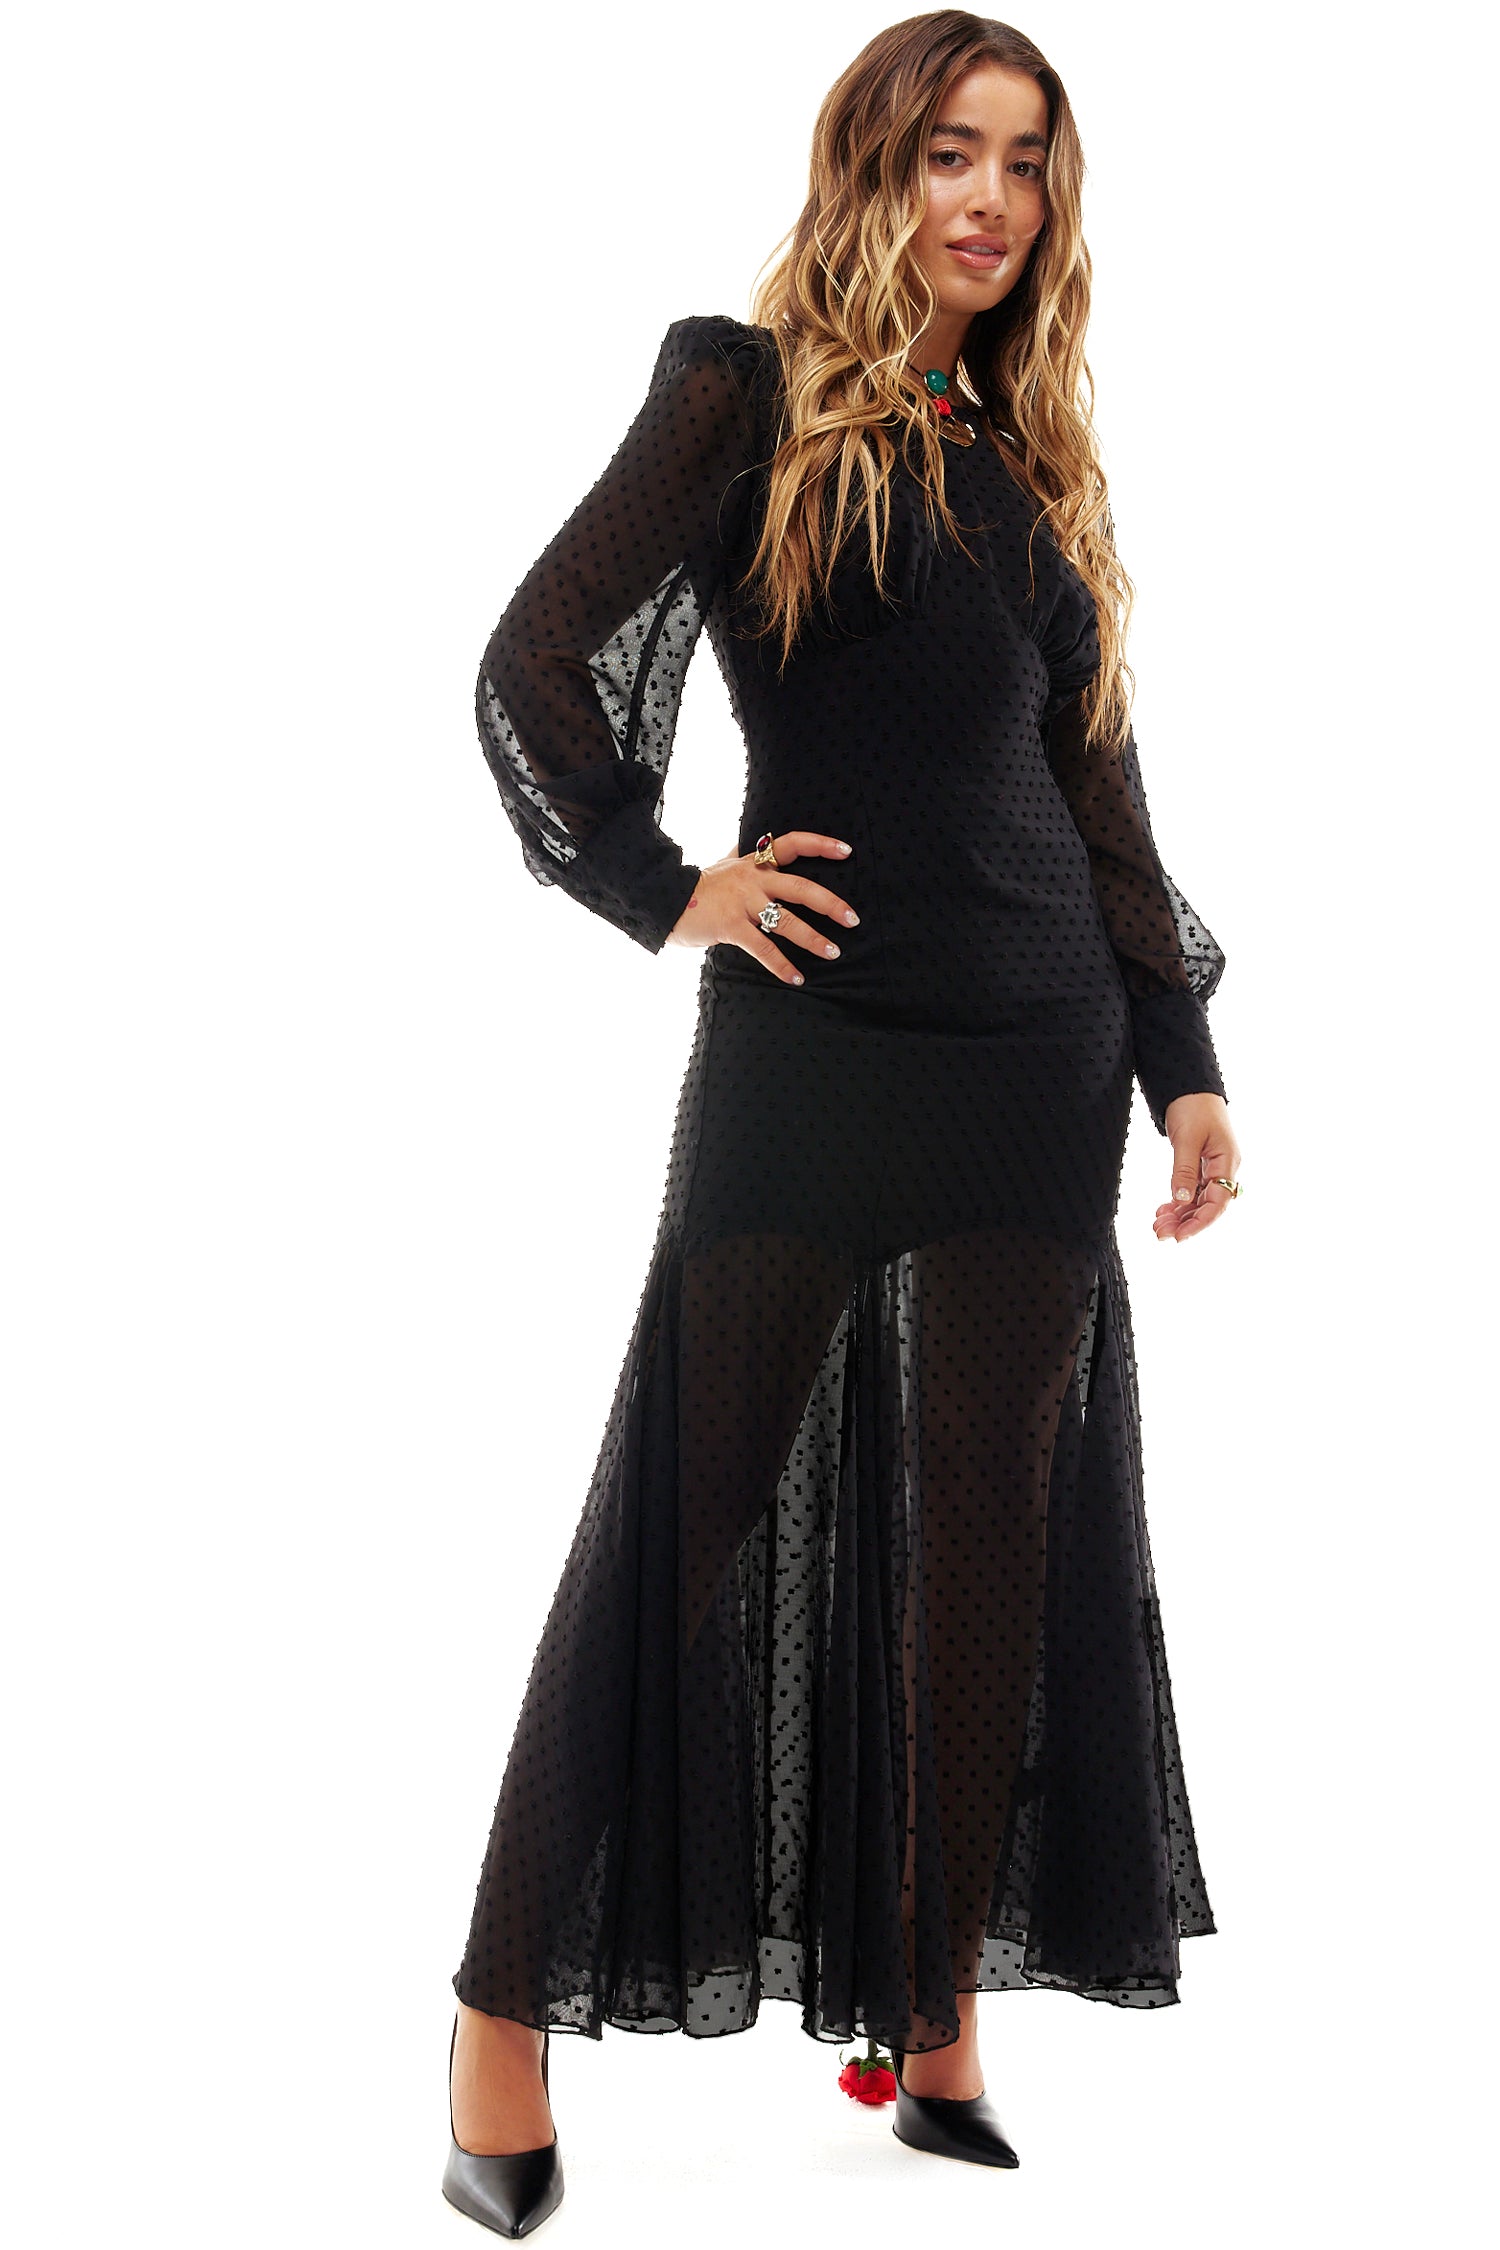 Model wearing Black Dobby Midi Dress standing facing the camera